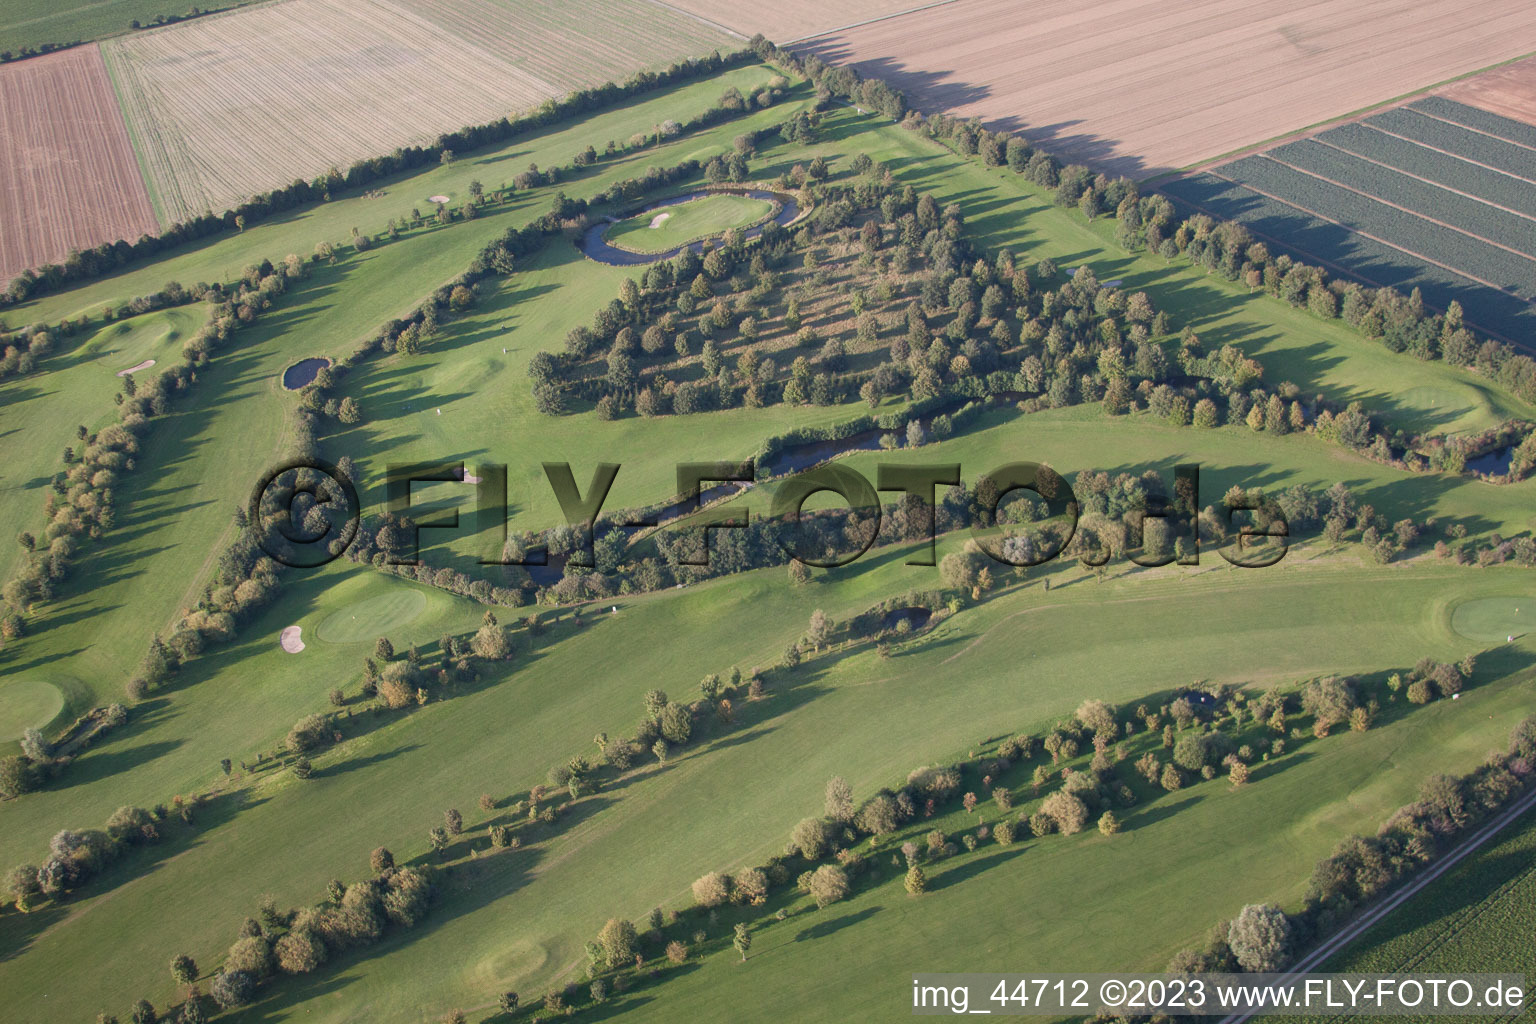 Golf club Mönchengladbach-Wanlo eV in Mönchengladbach in the state North Rhine-Westphalia, Germany from above